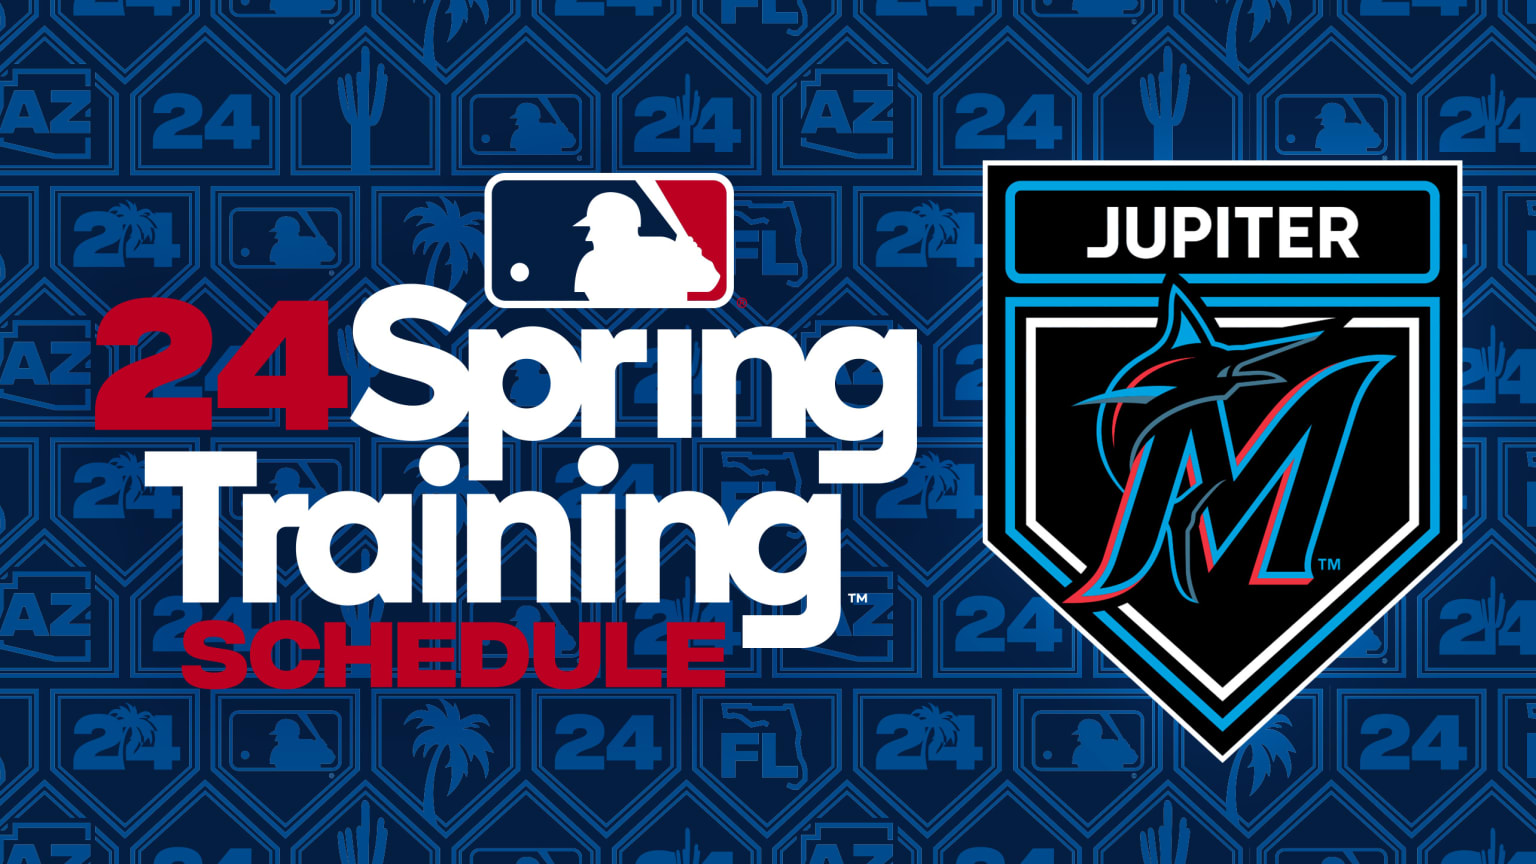 Marlins Release 2022 Spring Training Schedule - CBS Miami